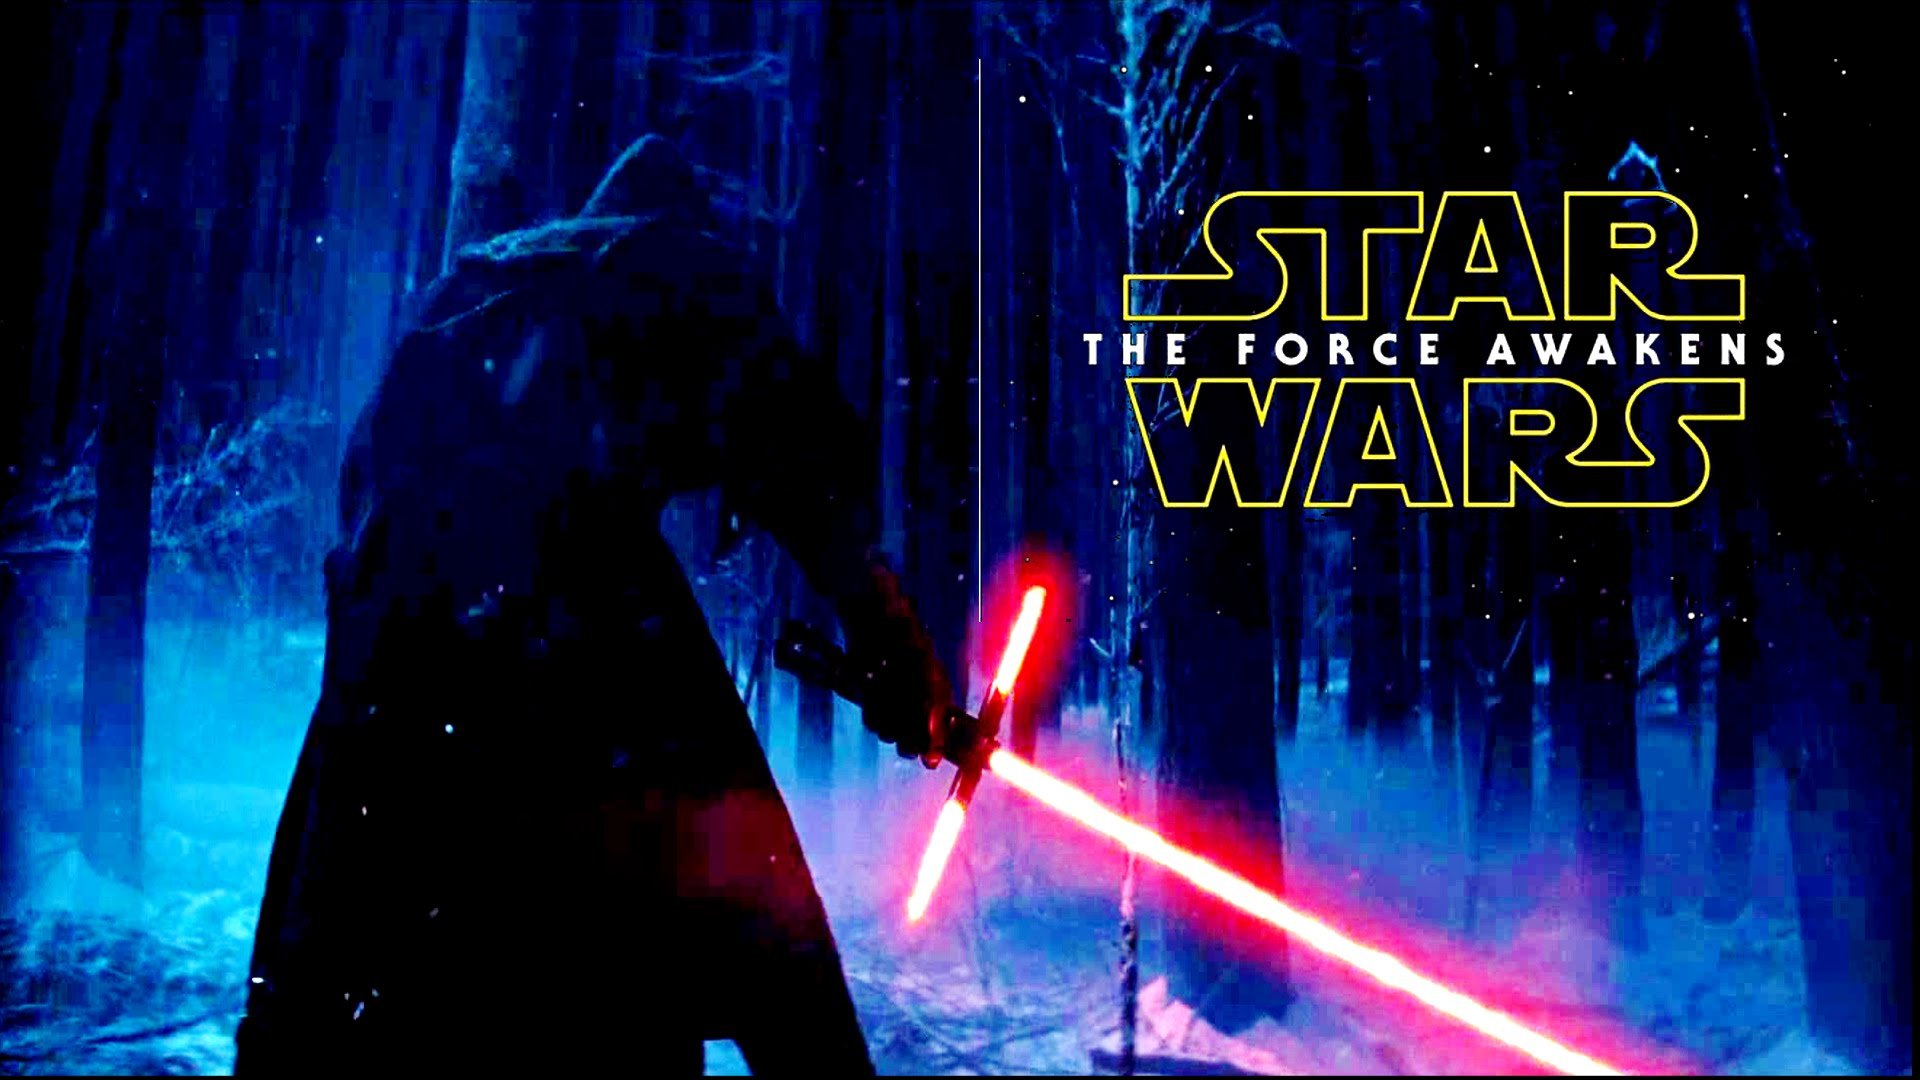 Star Wars Force Awakens Action Sci Fi Adventure Disney Futuristic